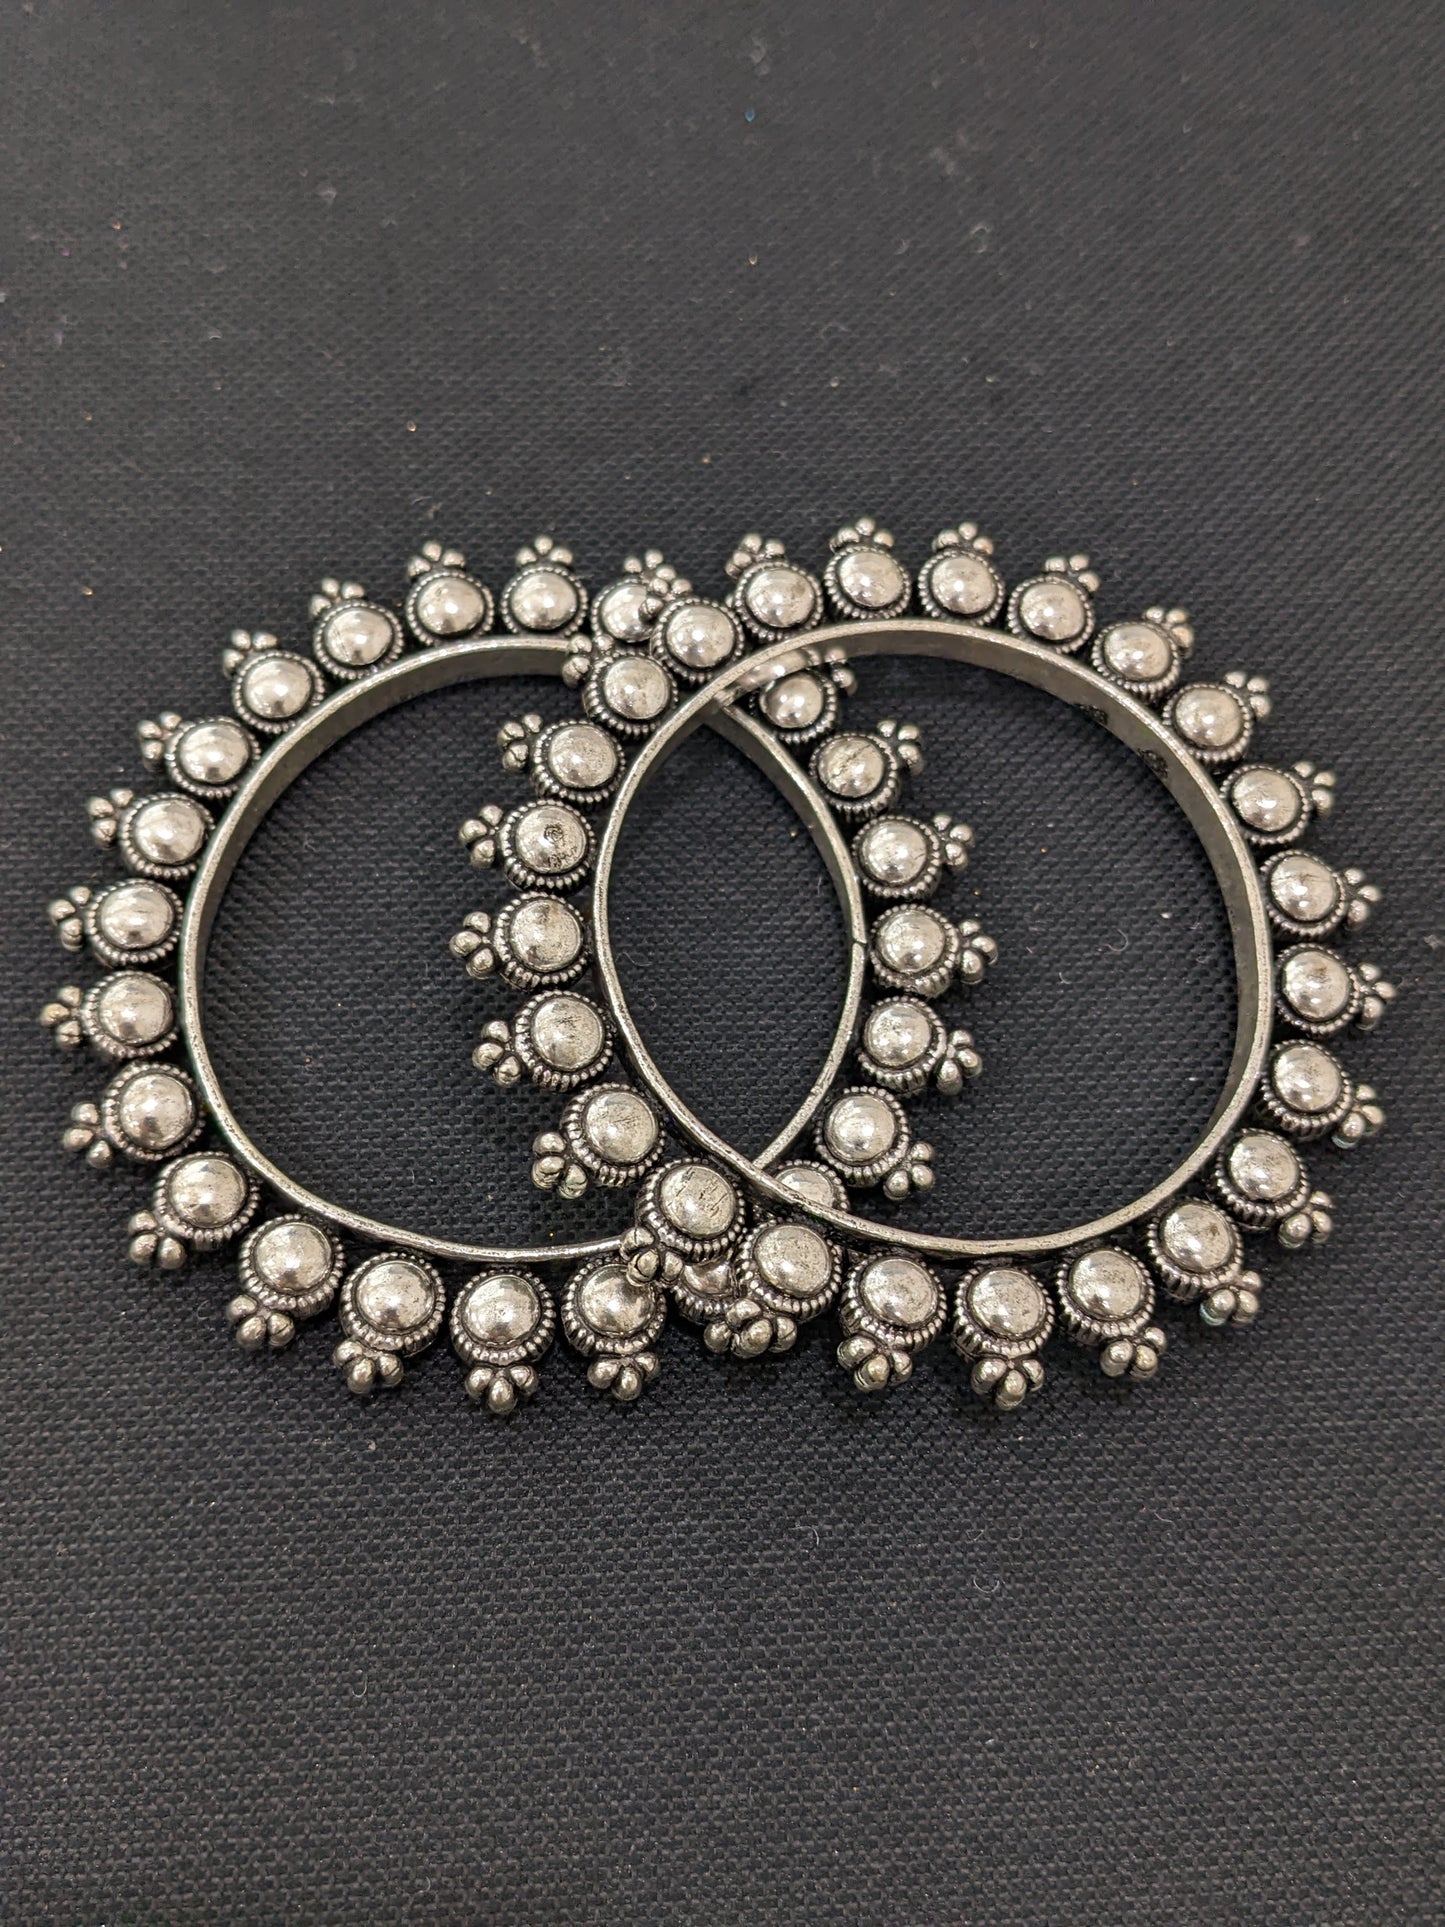 Oxidized silver pair bangles - Round 3 dot design